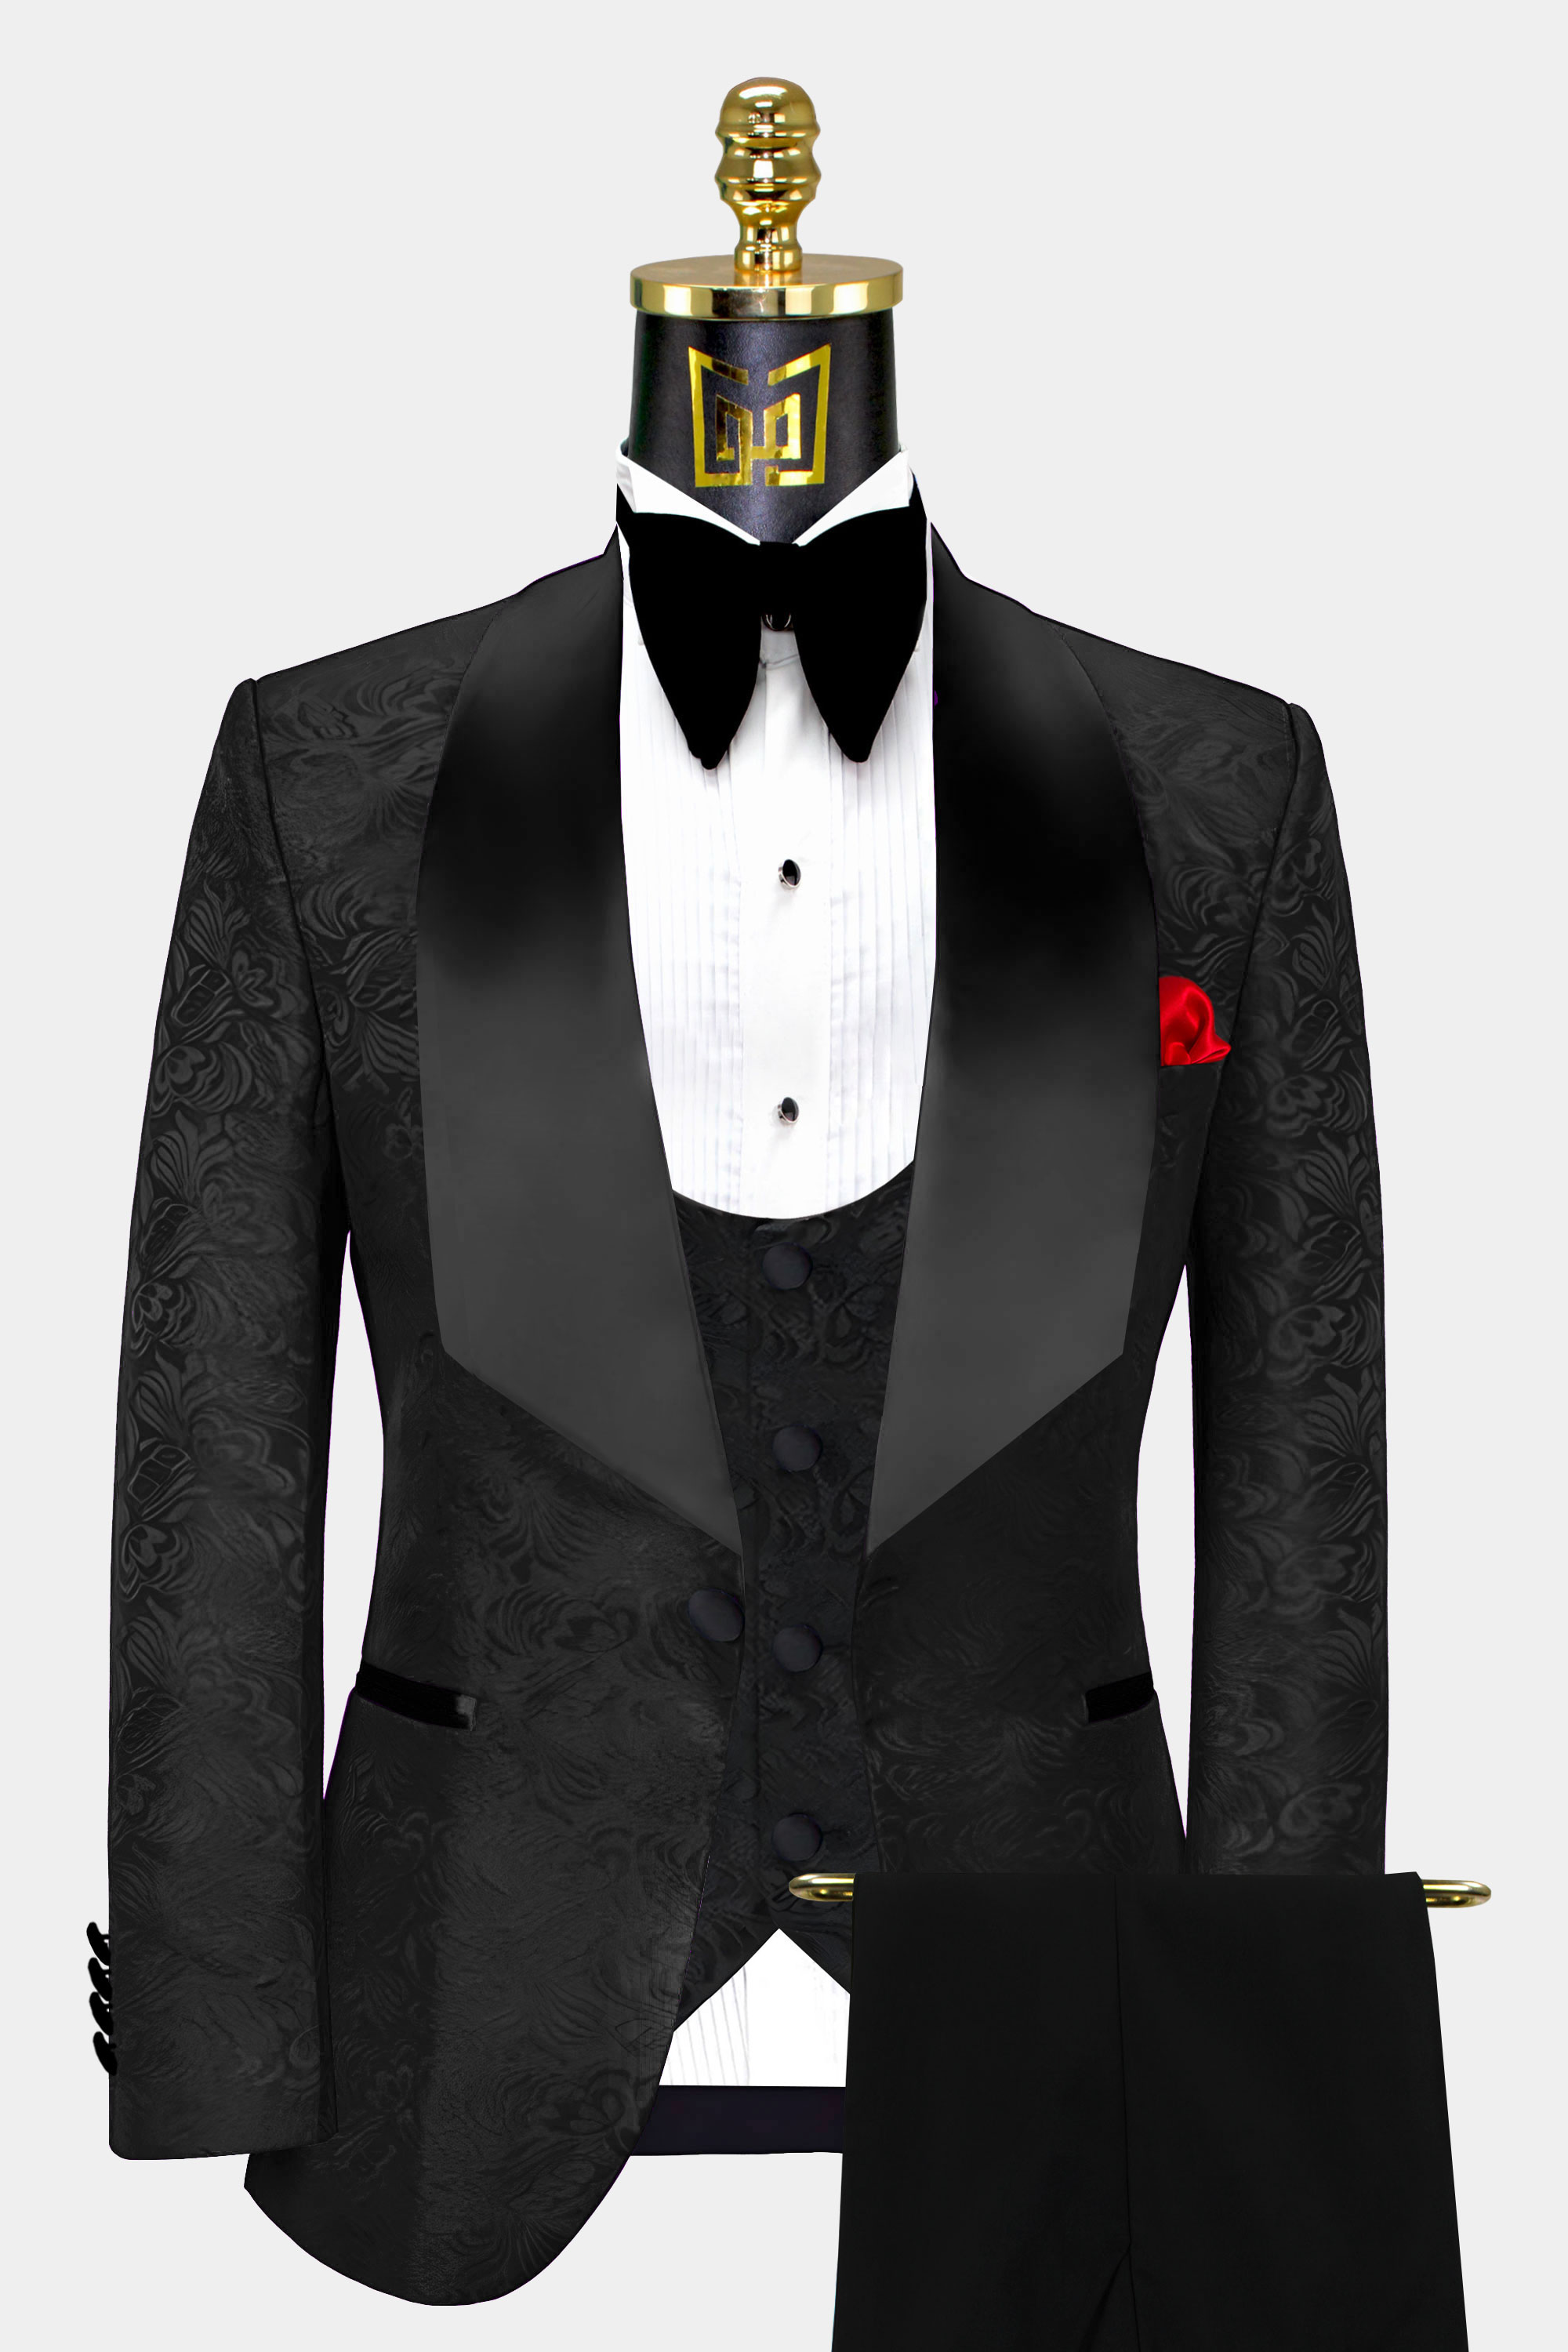 Mens-All-Black-Tuxedo-Groom-Wedding-Suit-Prom-Outfit-from-Gentlemansguru.com